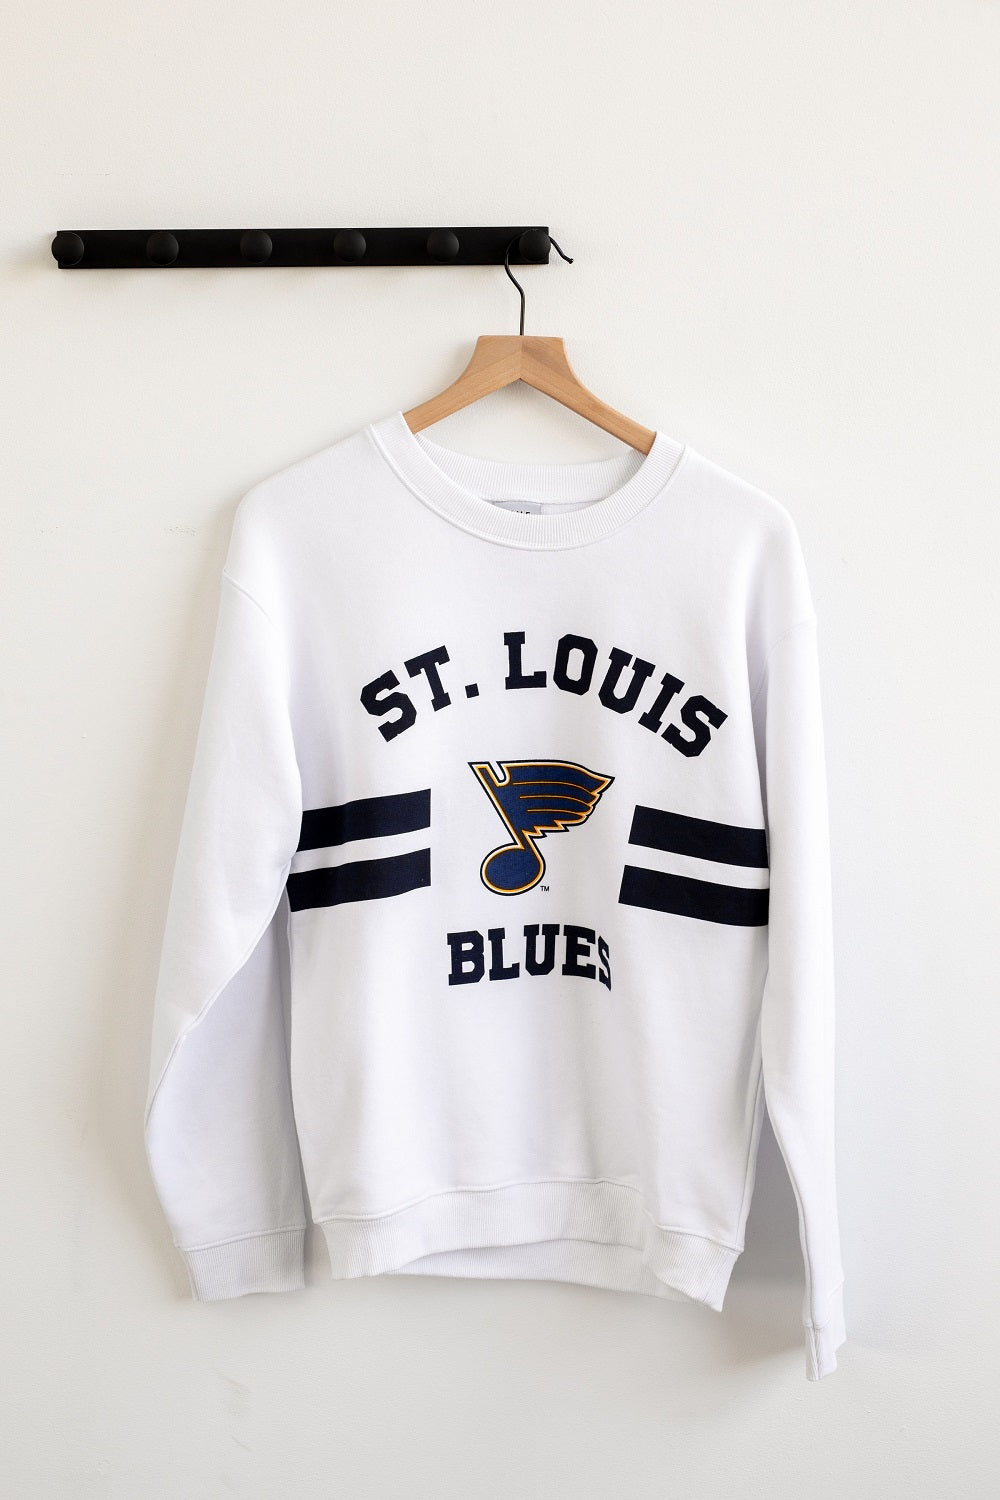 Play Gloria! St Louis Blues shirt, hoodie, sweater, long sleeve